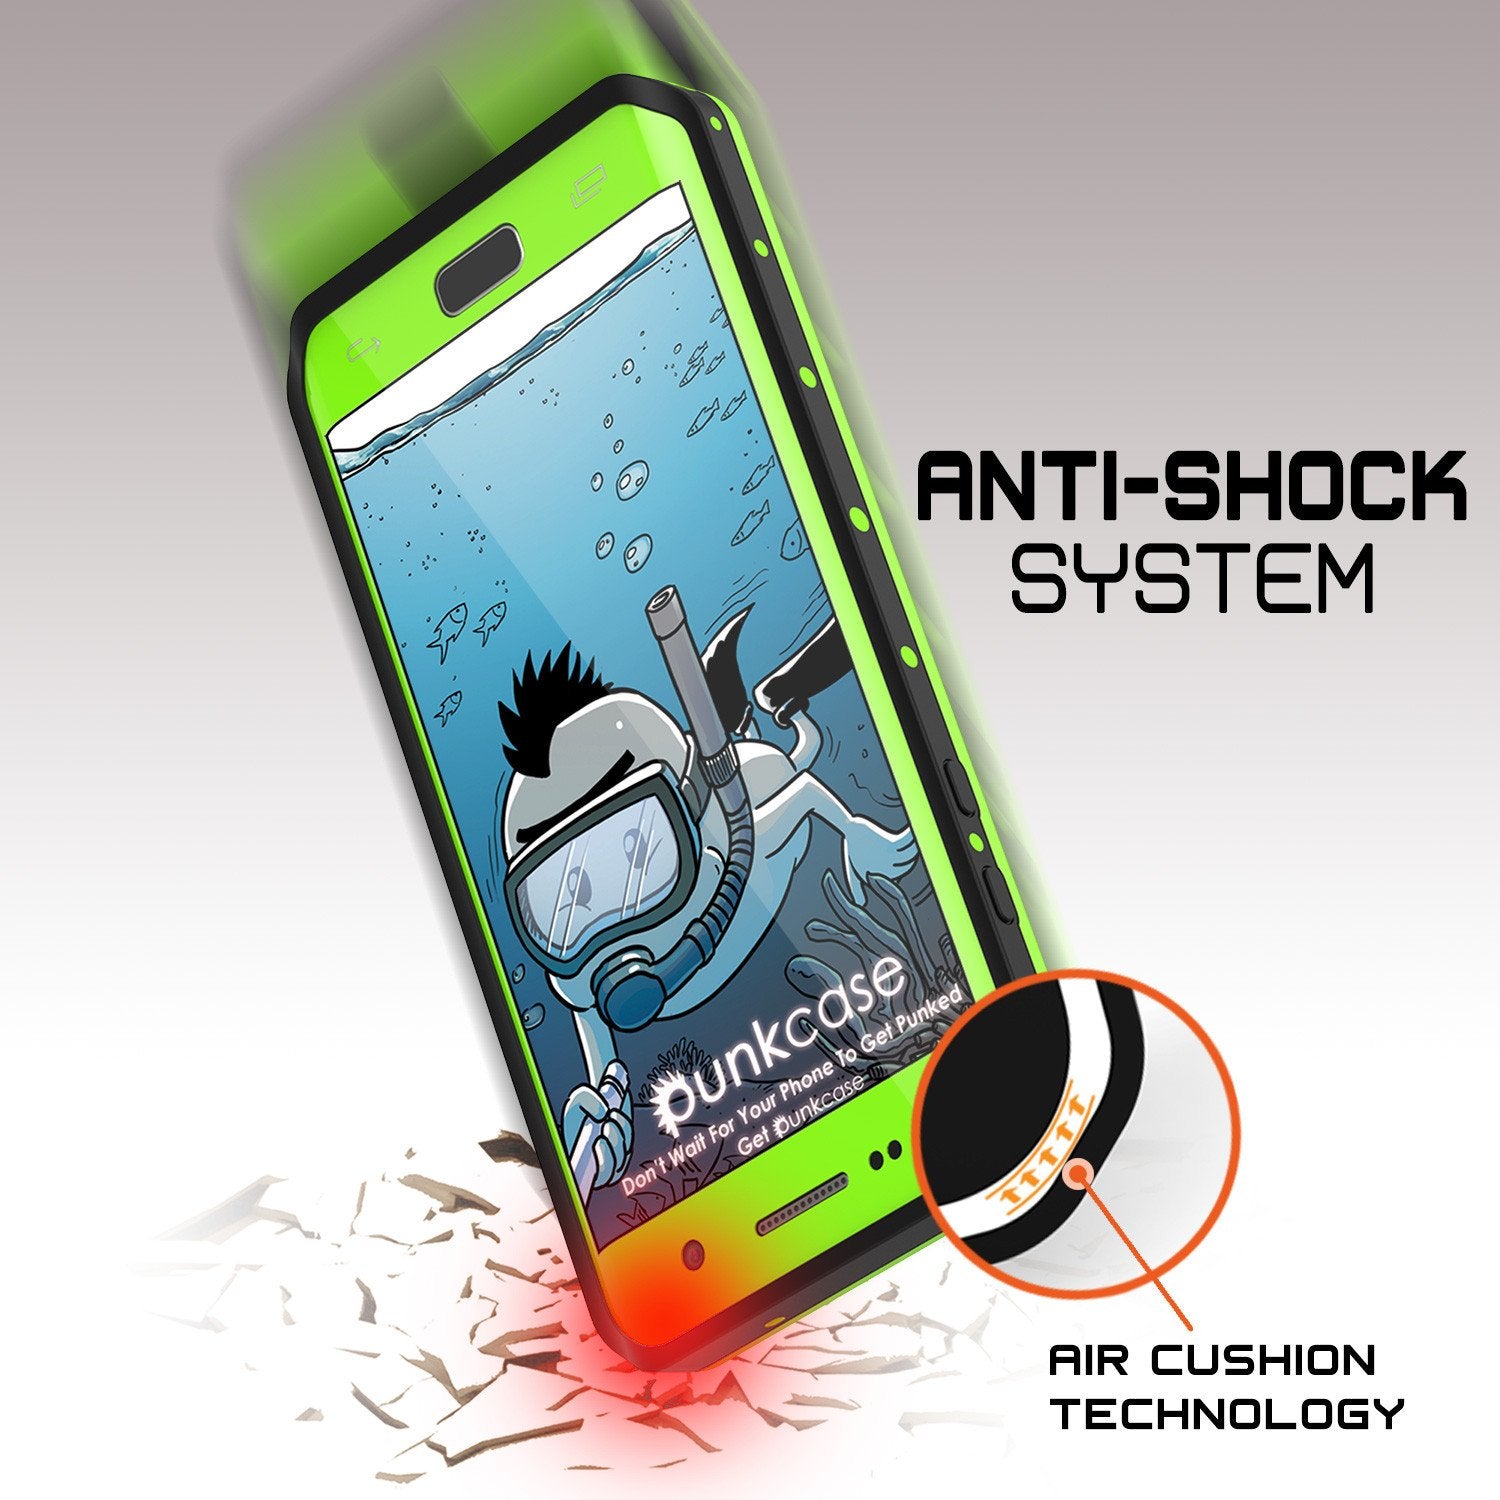 Galaxy S7 EDGE Waterproof Case PunkCase StudStar Light Green Thin 6.6ft Underwater IP68 ShockProof